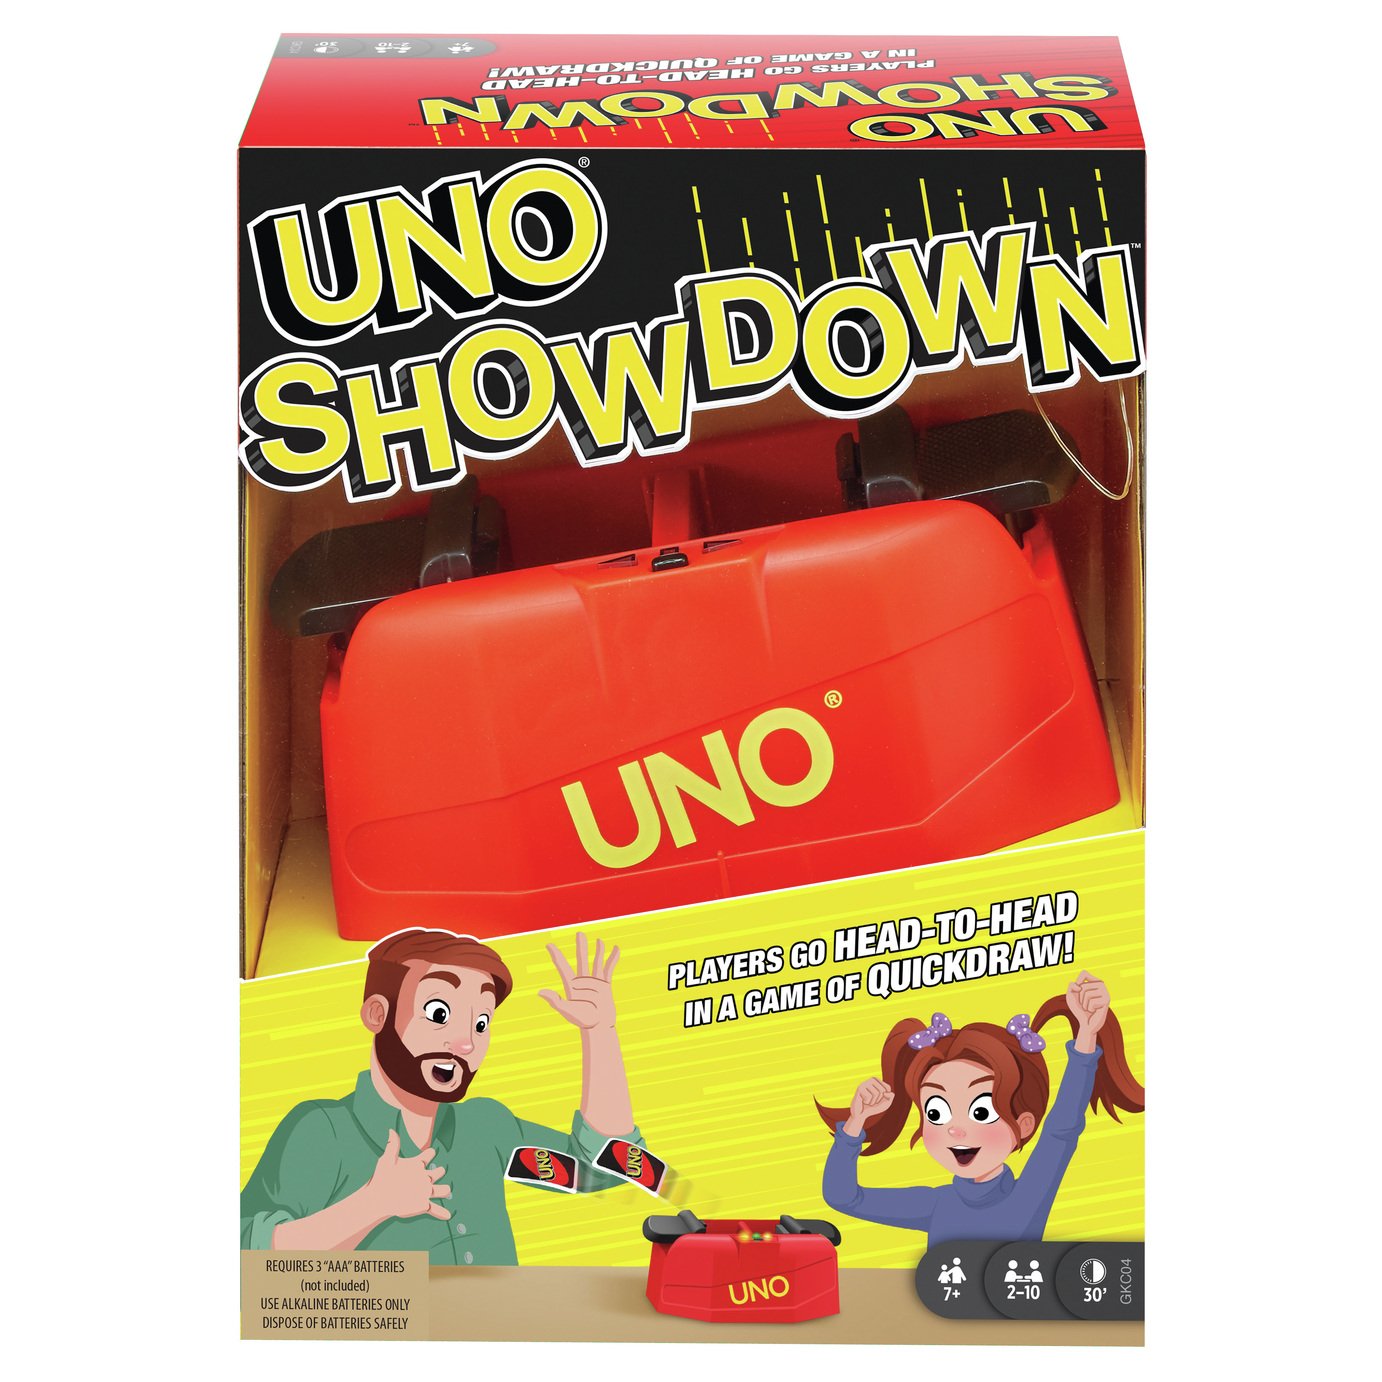 UNO Showdown Card Game Review